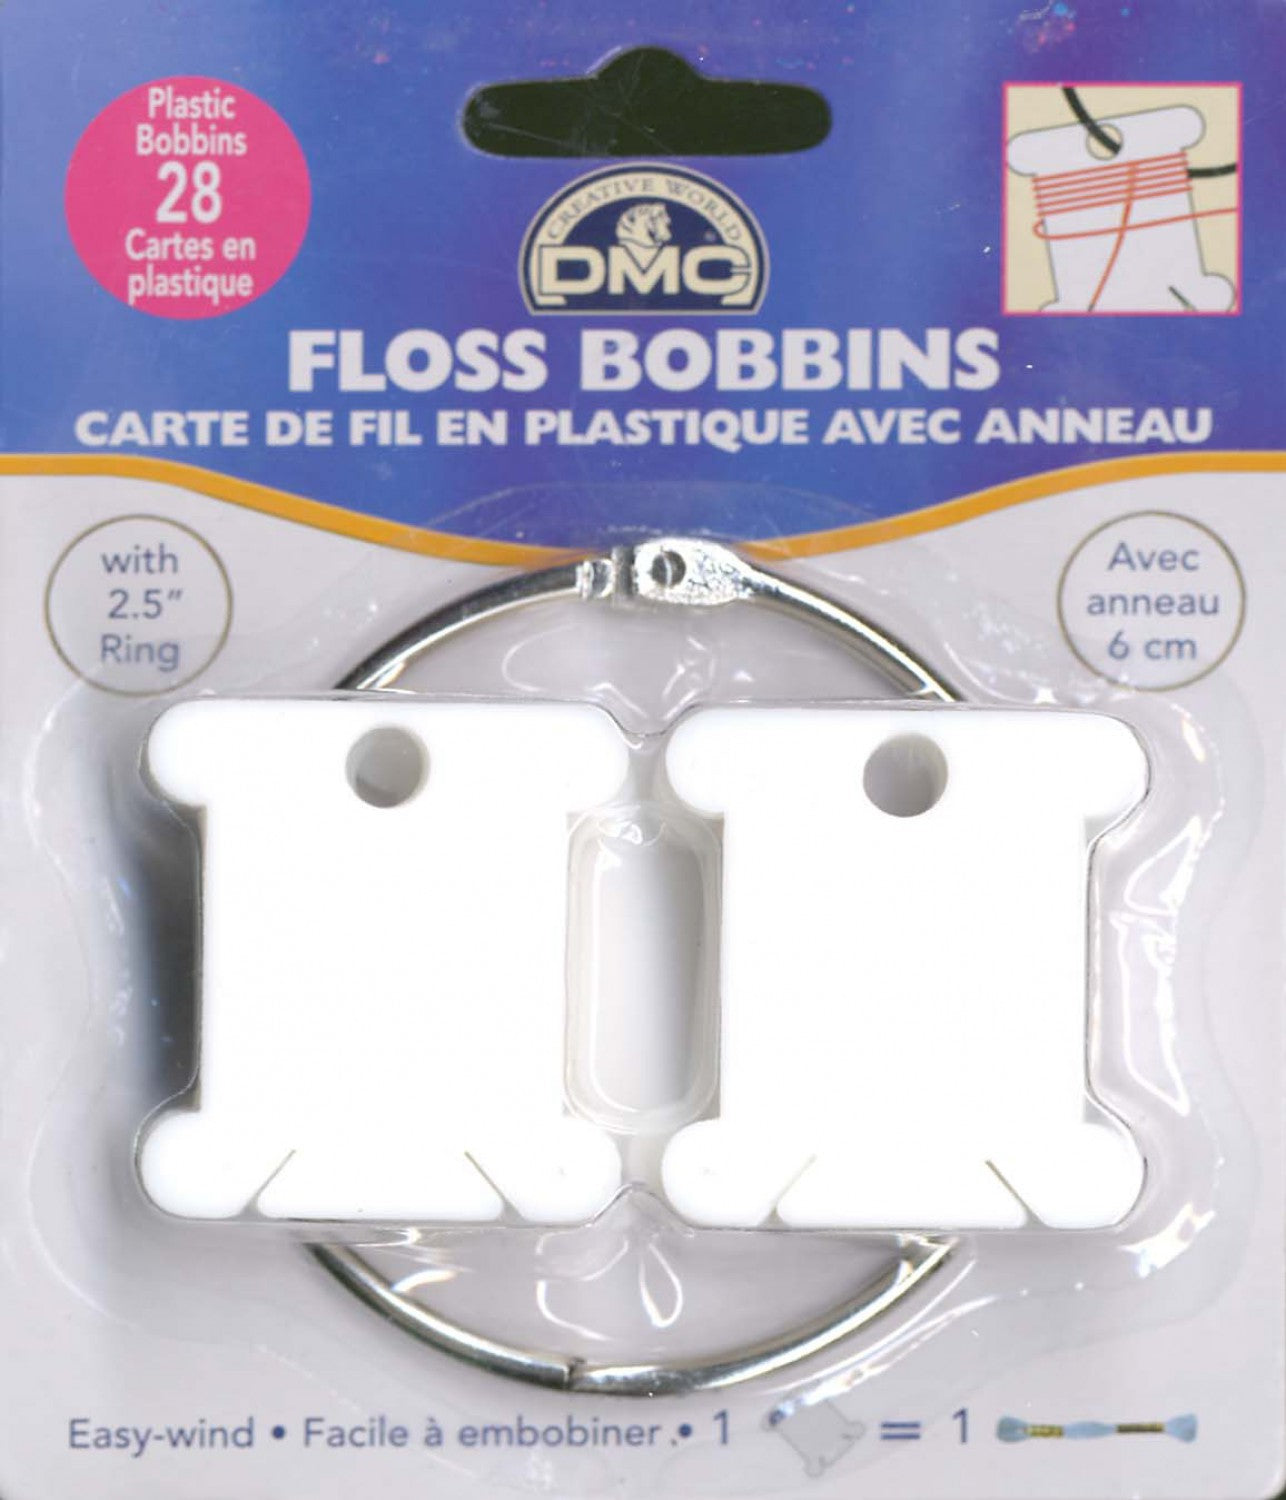 DMC Floss Bobbins with 2.5 inch Ring